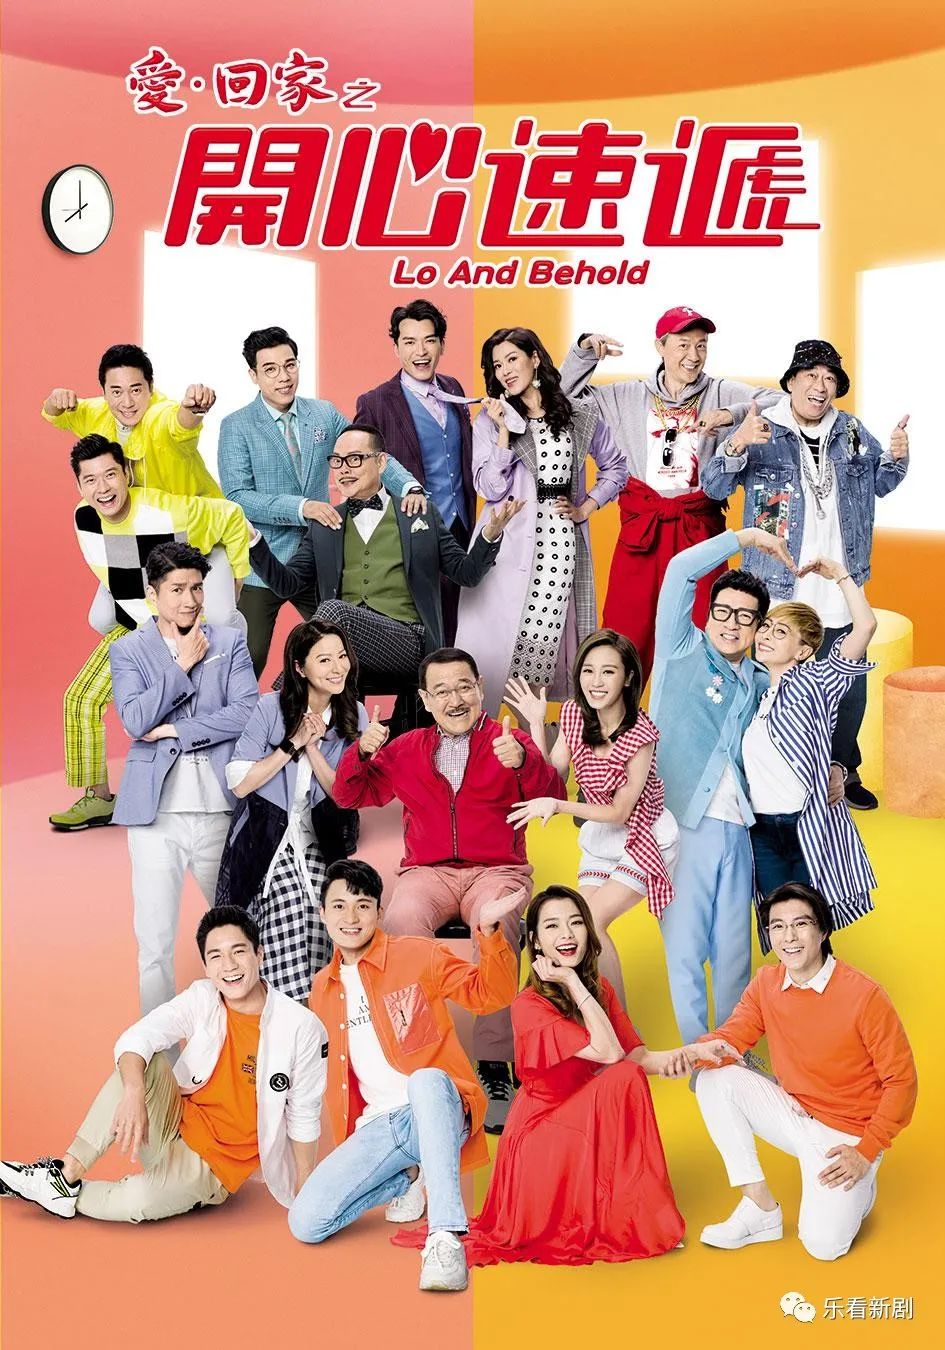 TVB开拍古装新剧《痞子殿下》，“废青安”以喜剧形式告别爱回家